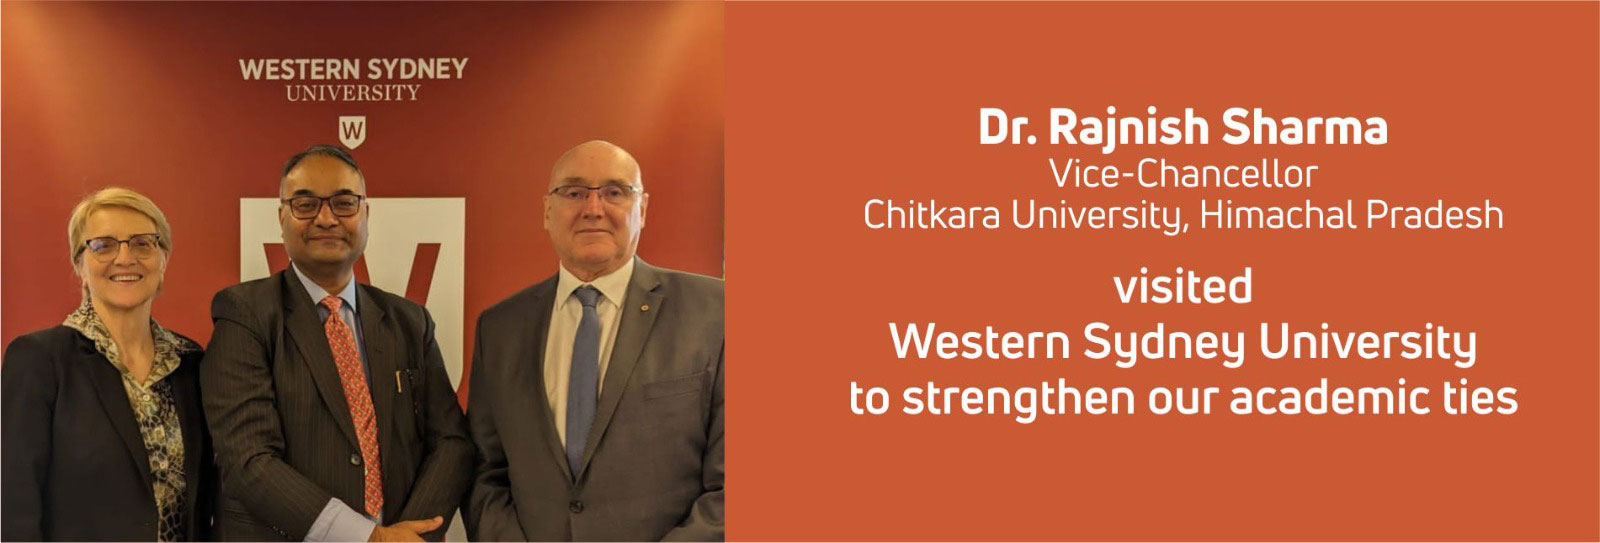 Chitkara University And Western Sydney University Strengthen Bonds For Global Academic